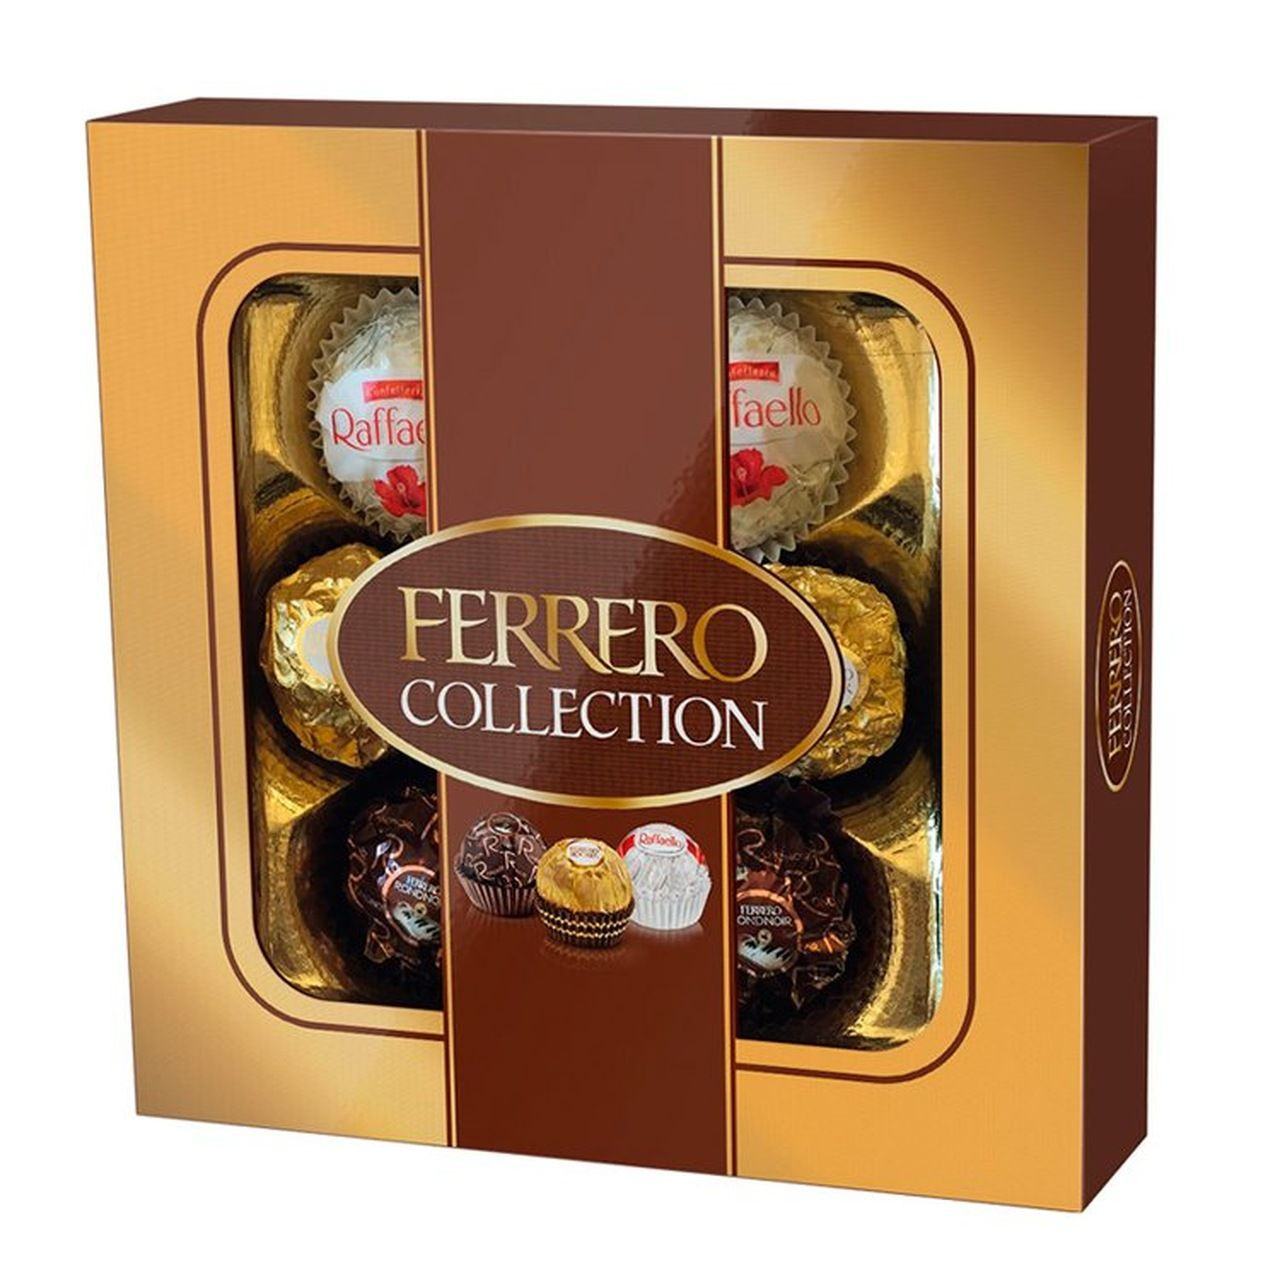 Ferrero Collection - Complemento